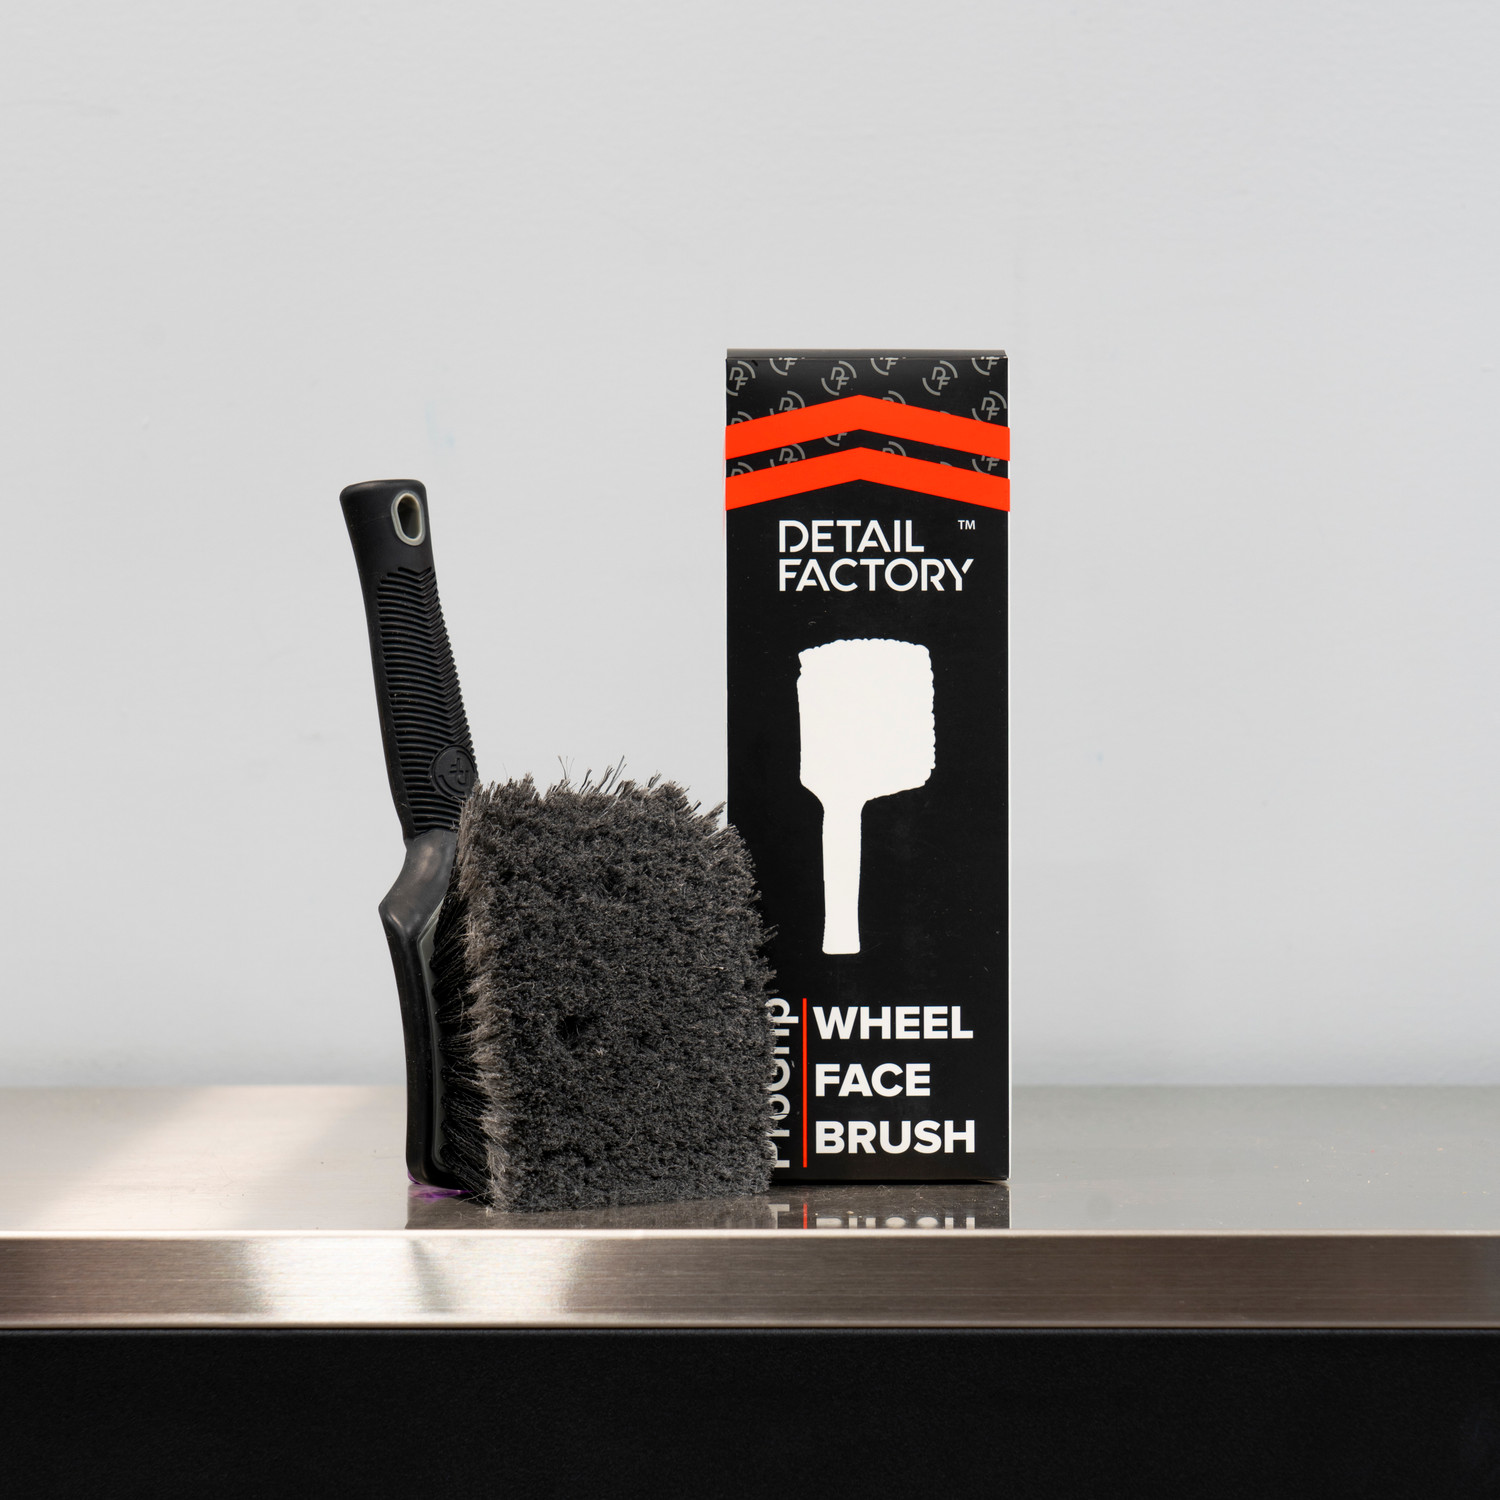 Detail Factory - Wheel Brush Kit